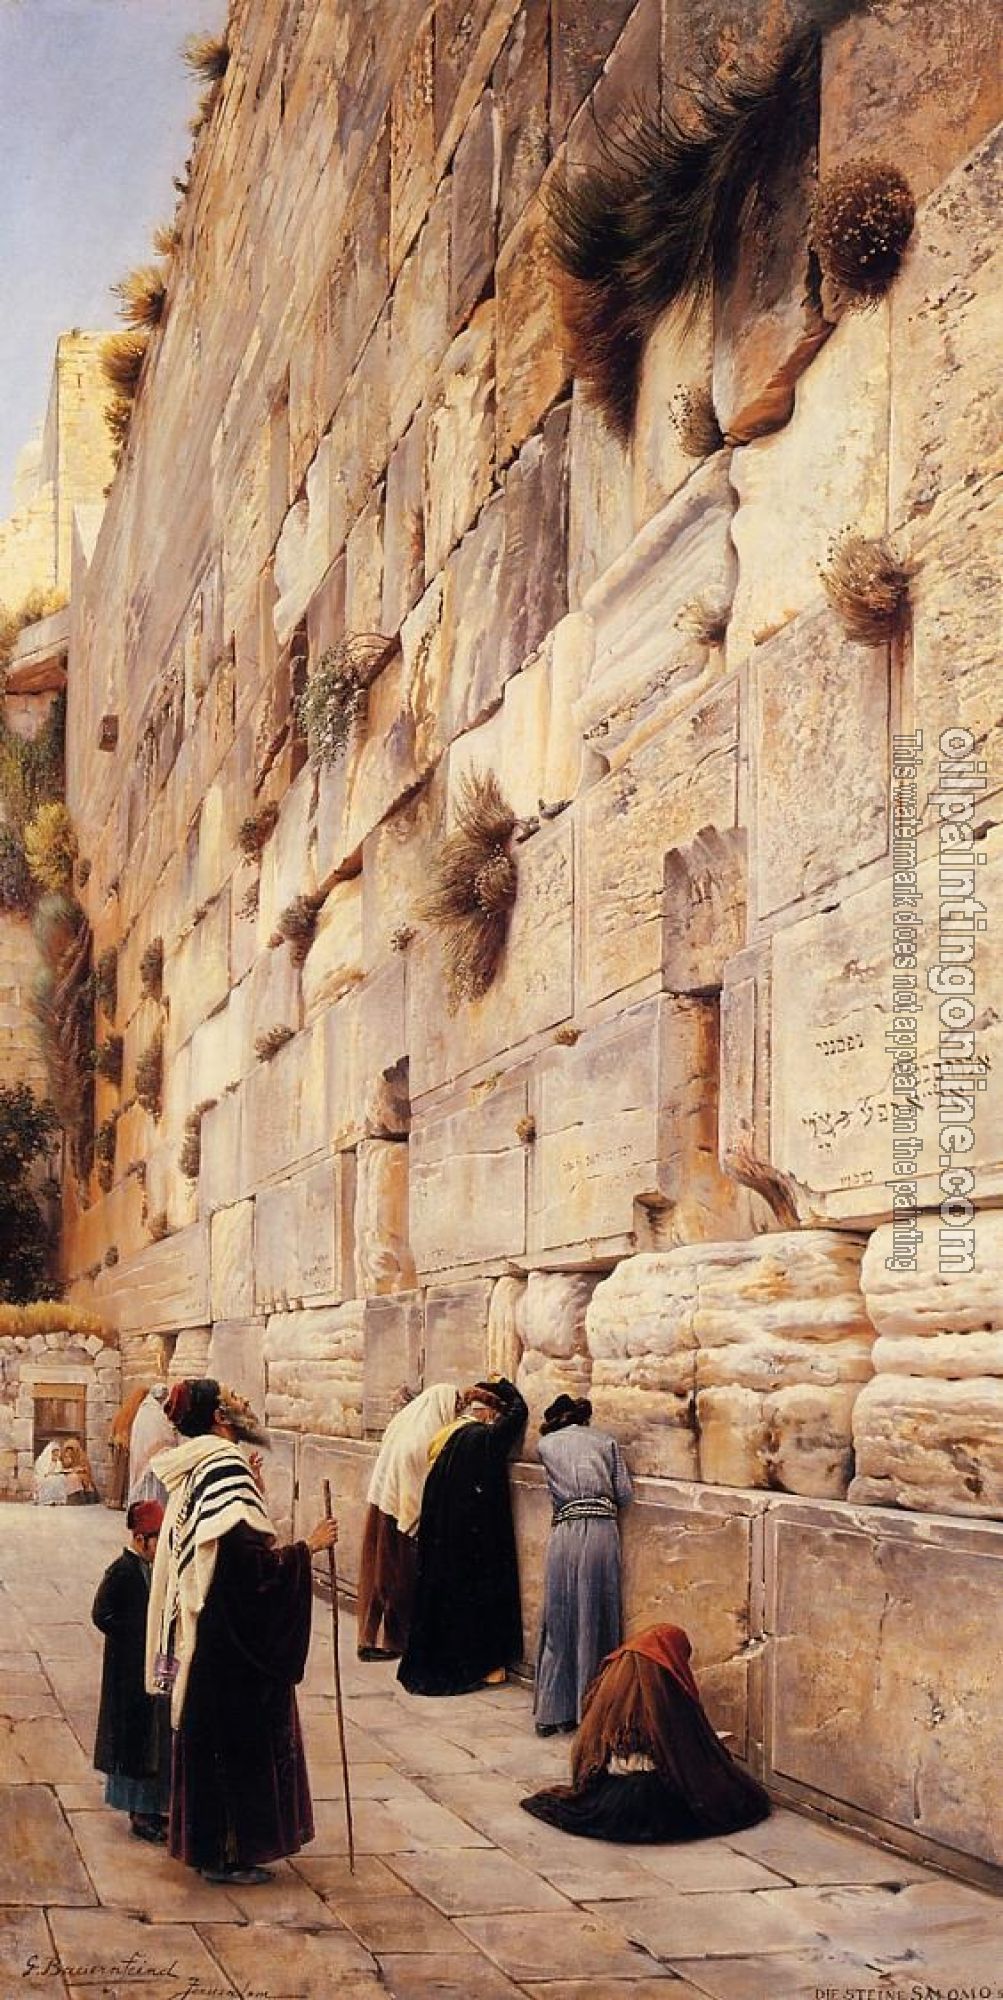 Bauernfiend, Gustav - The Wailing Wall, Jerusalem